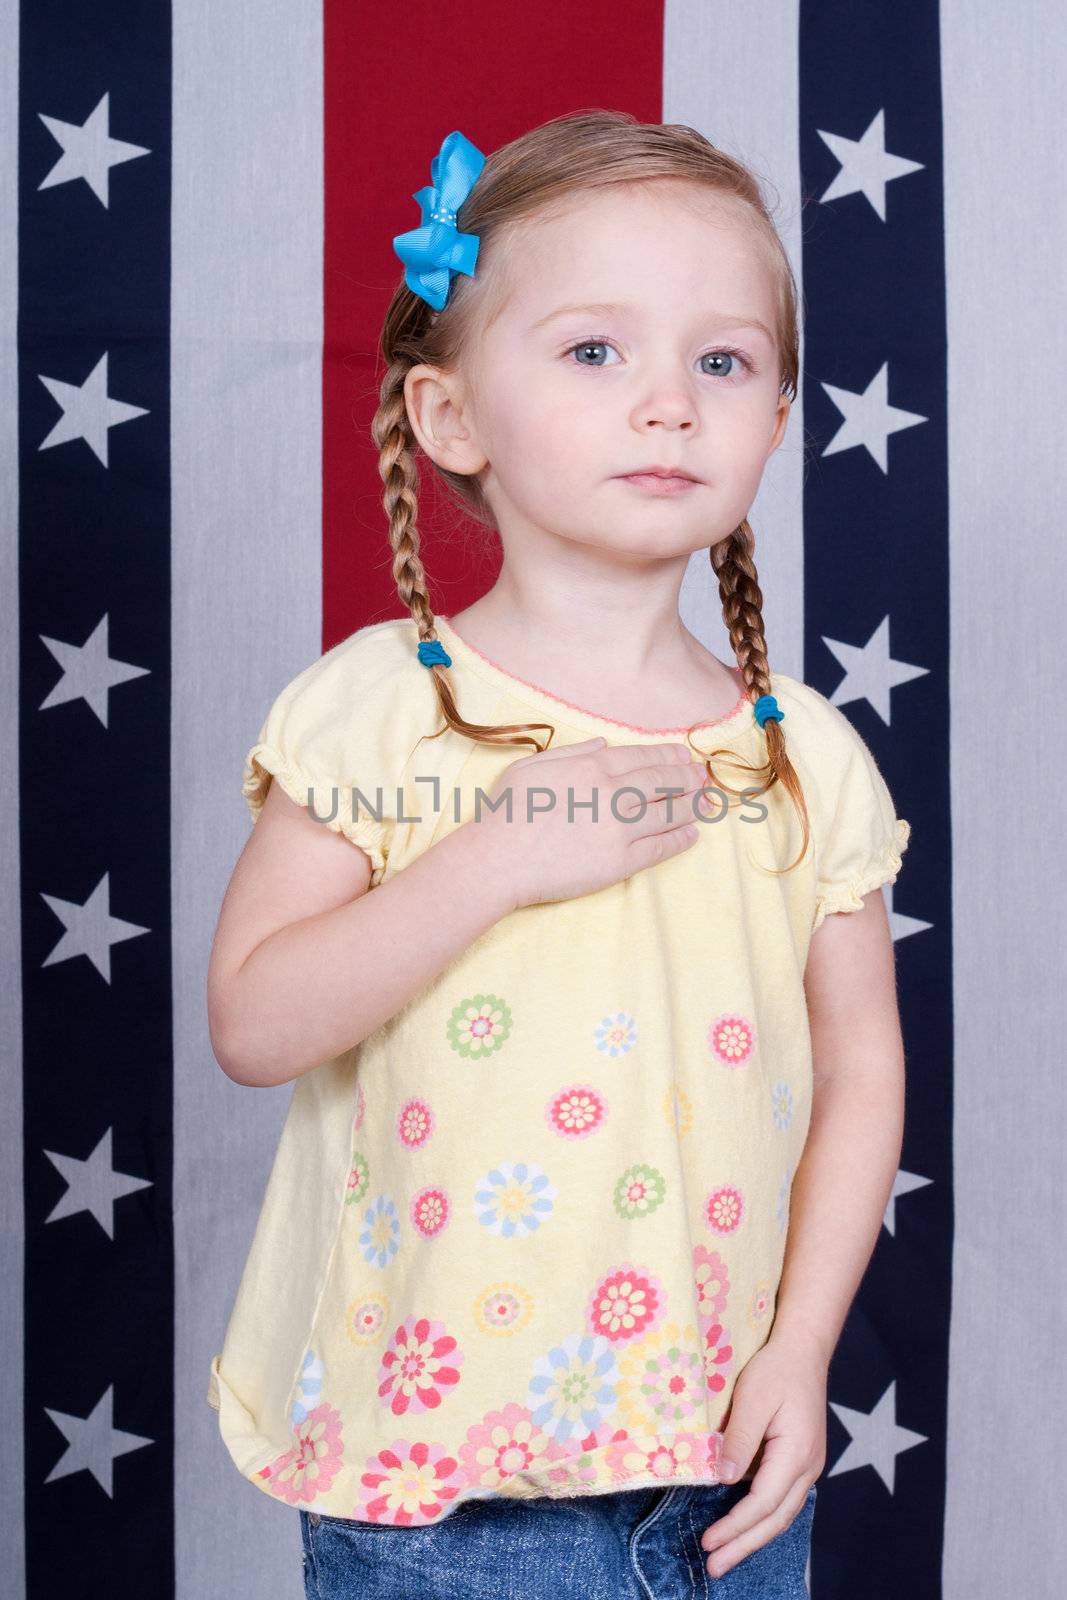 Adorable girl pledging alegiance in front of a patriotic design.